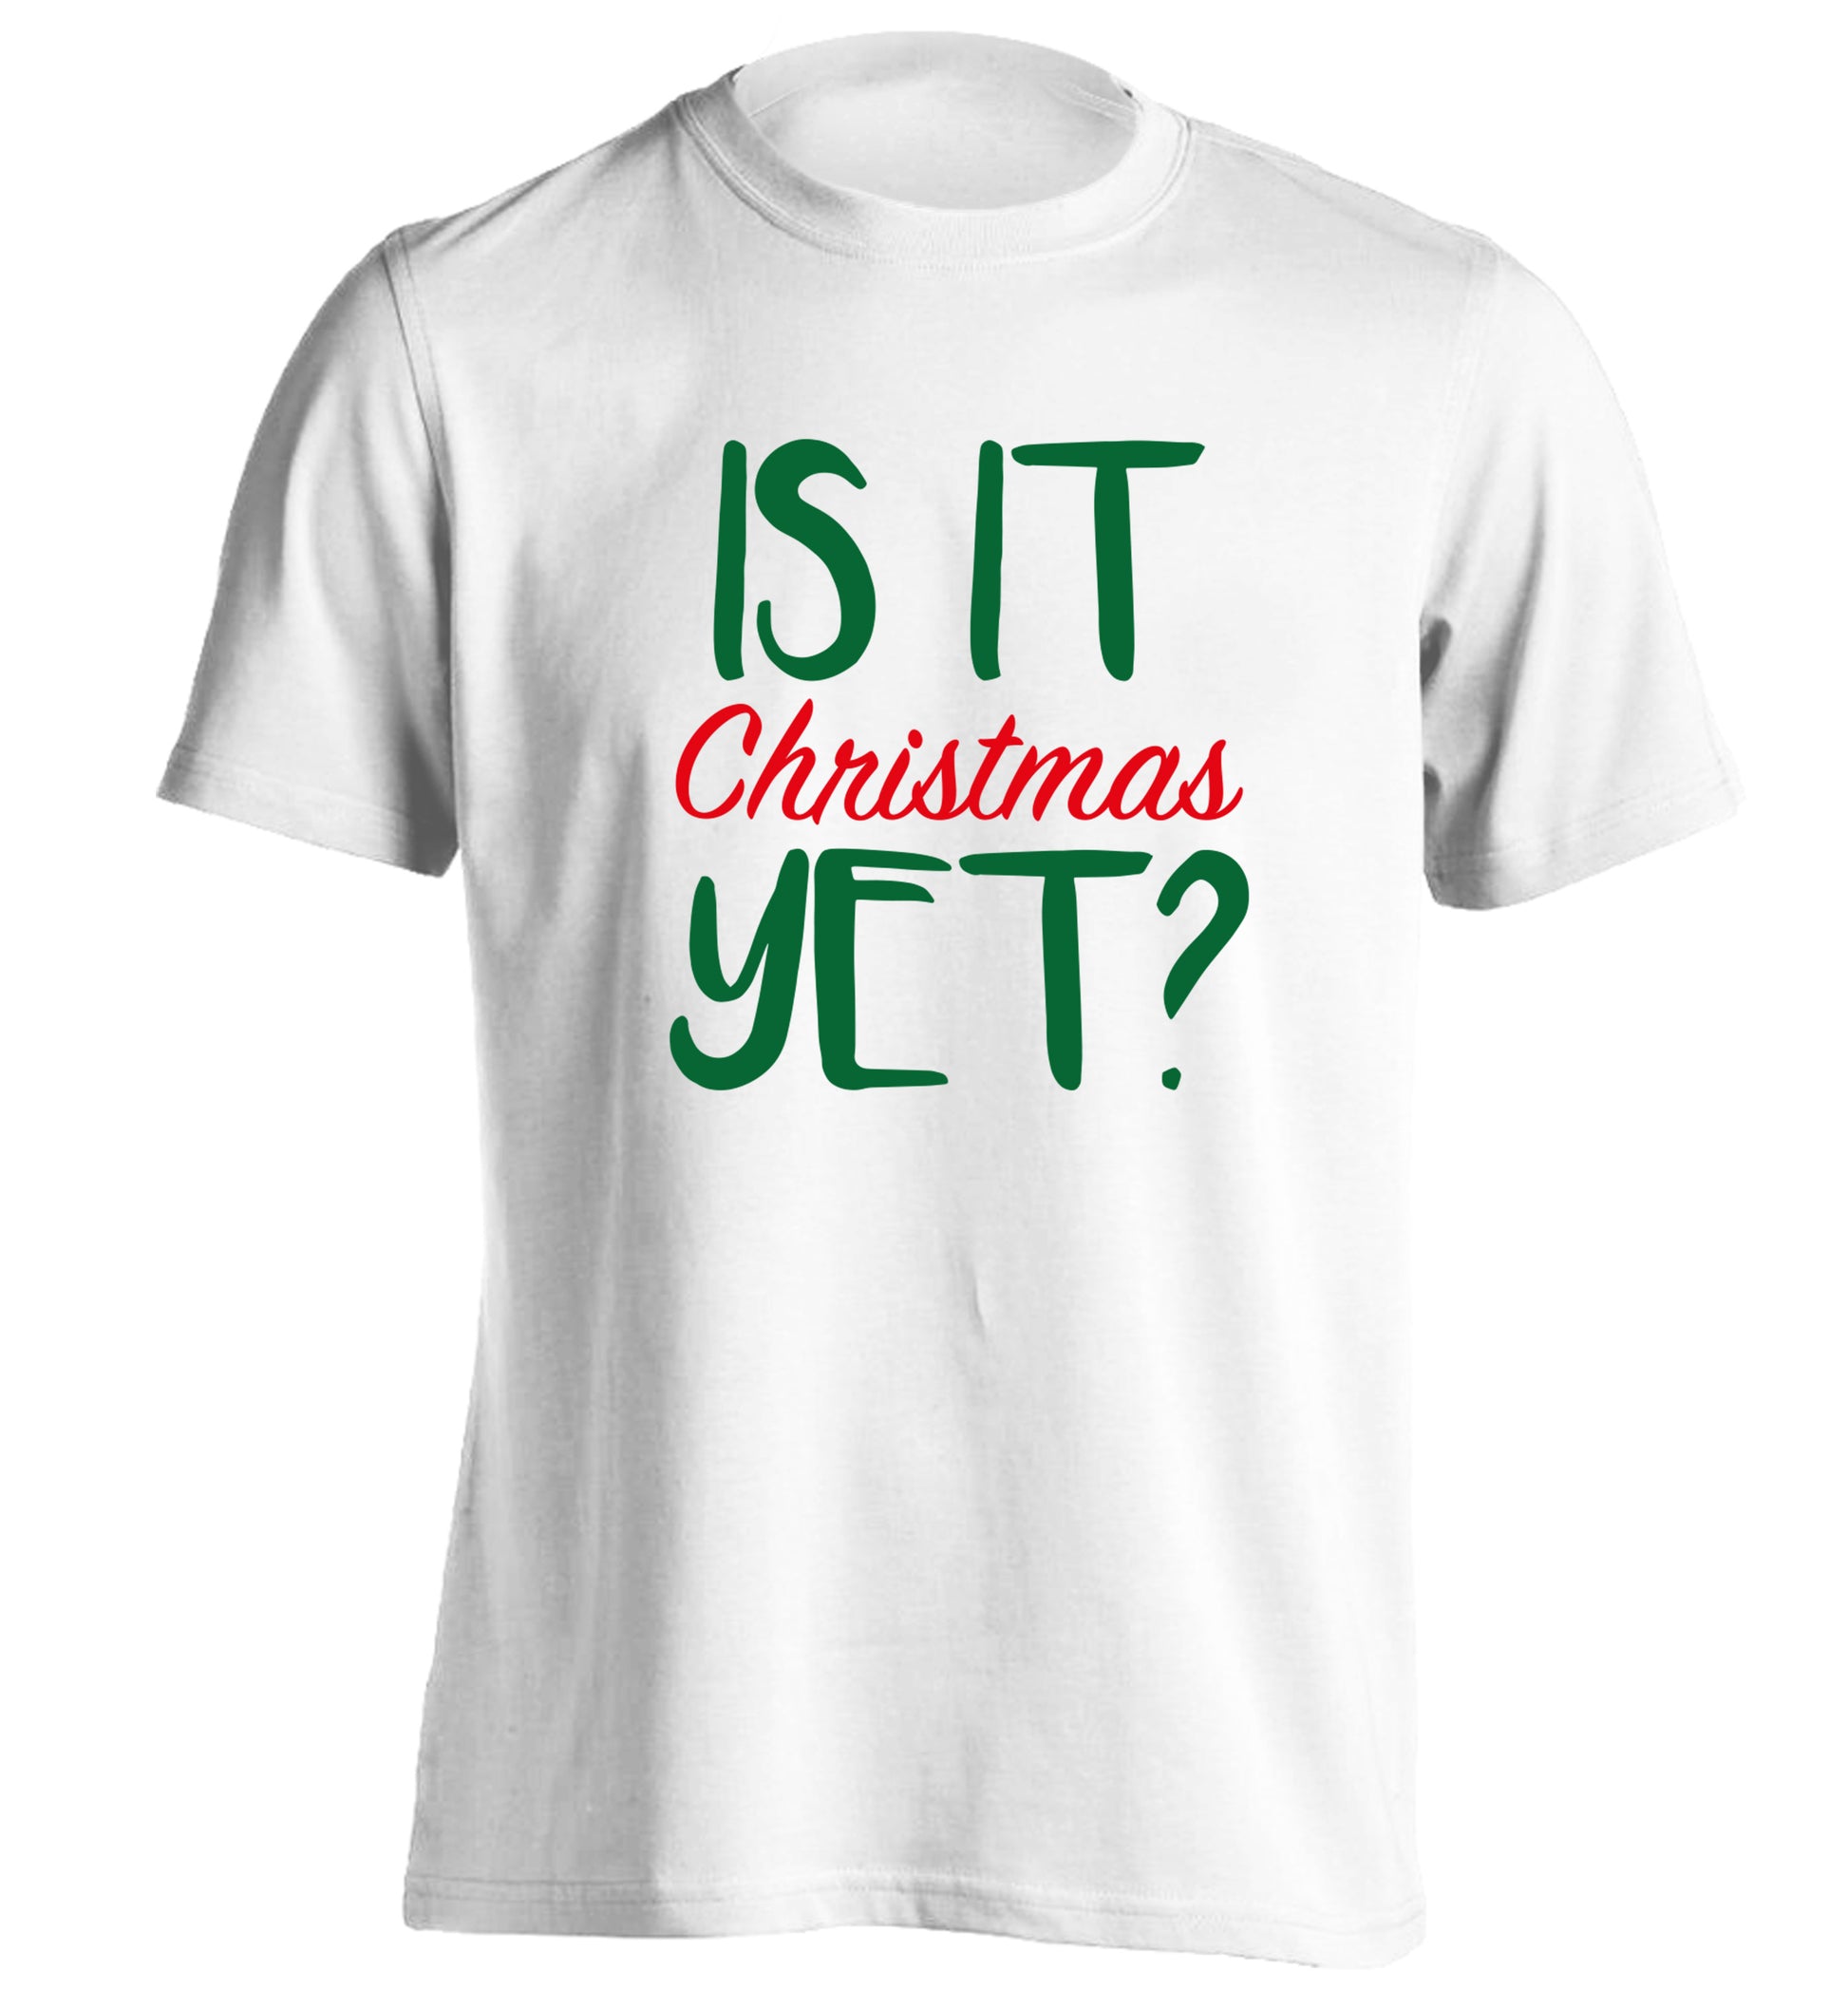 Is it Christmas yet? adults unisex white Tshirt 2XL